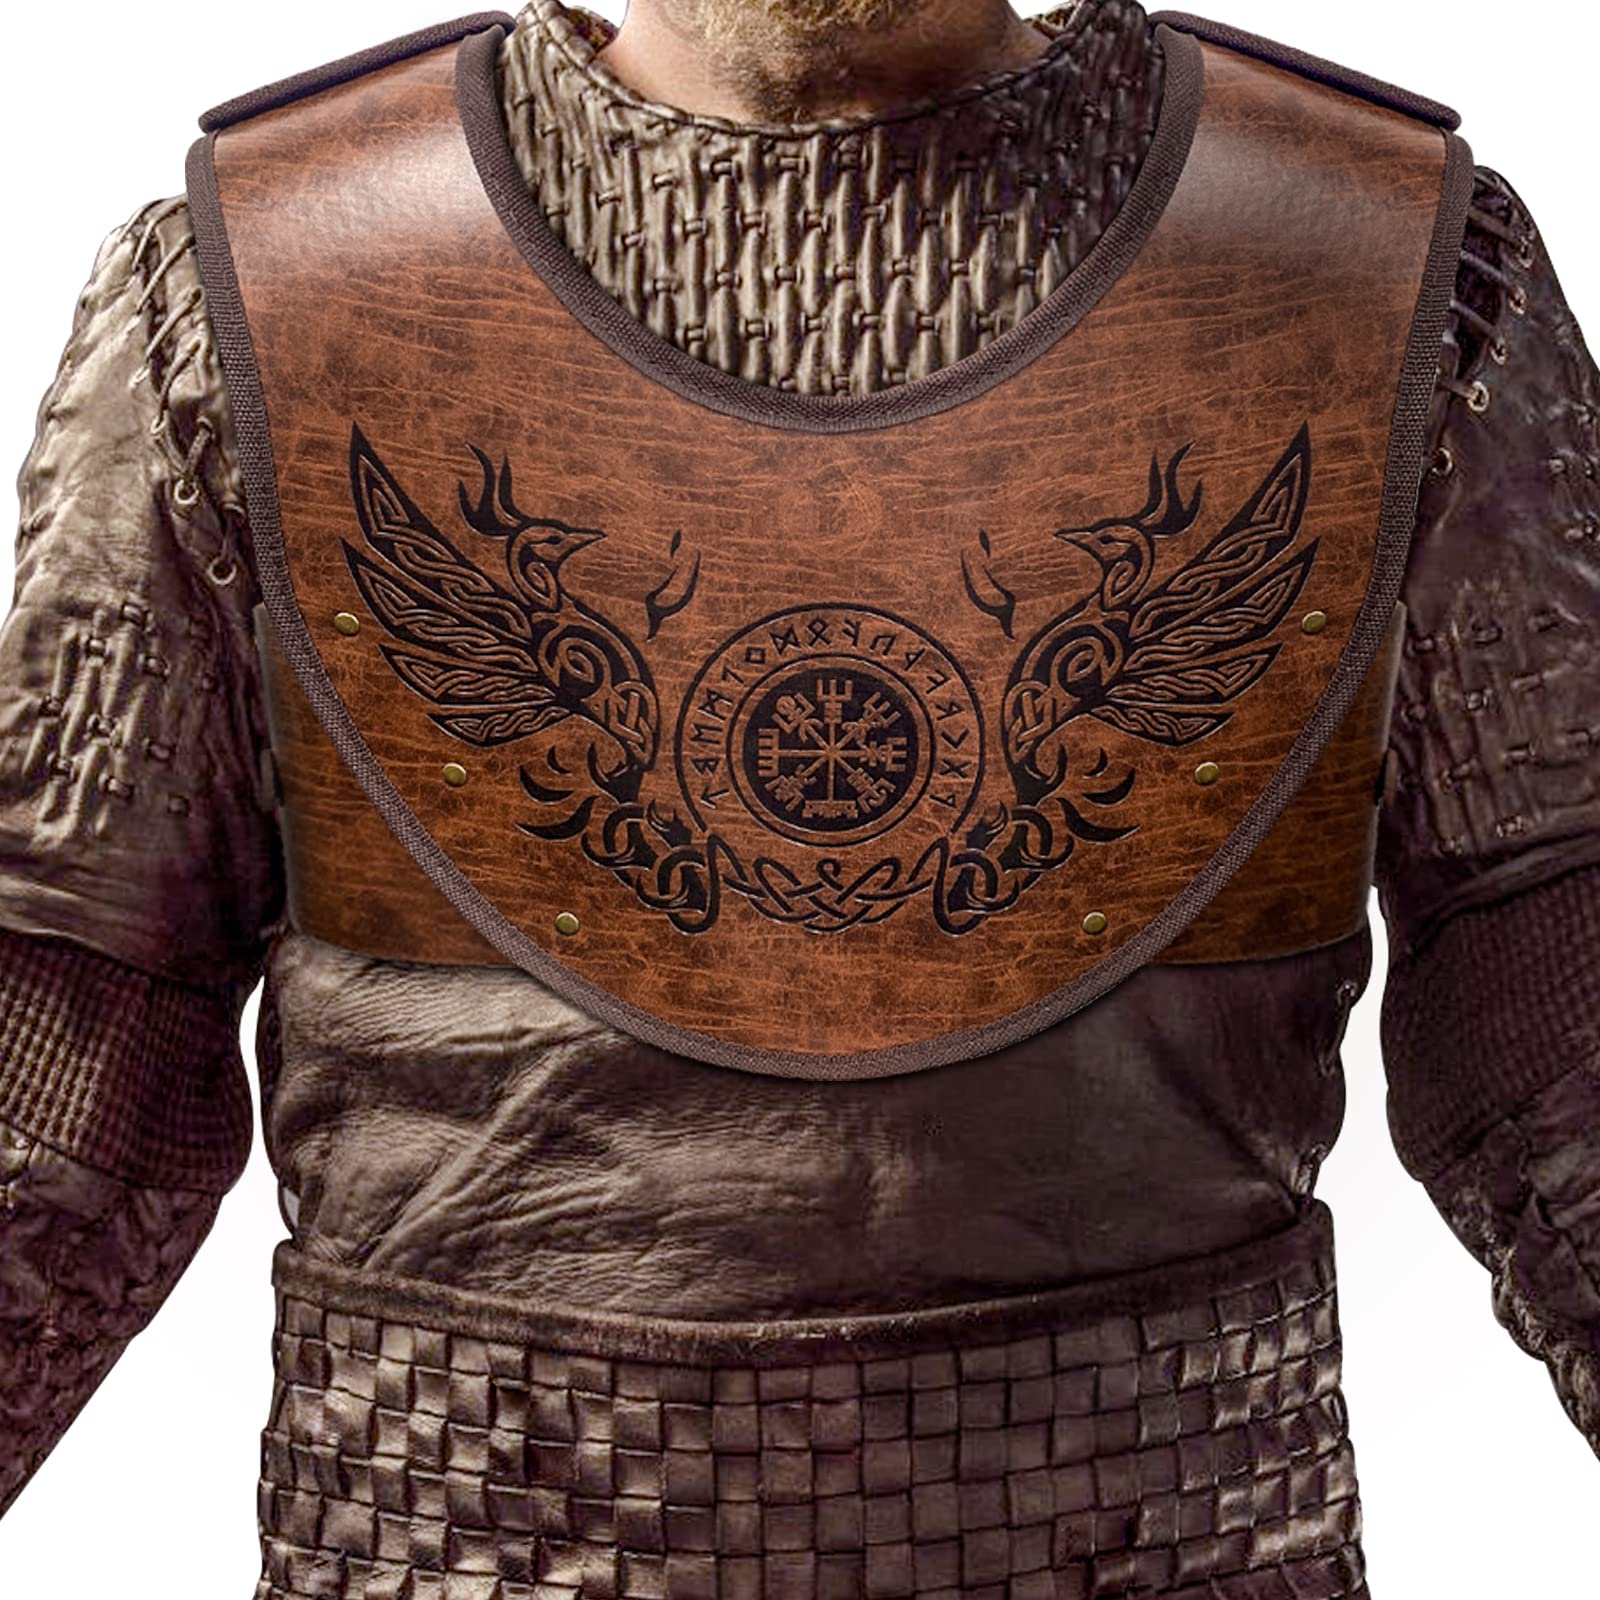 Leather War Belt Pattern - Leather Armor